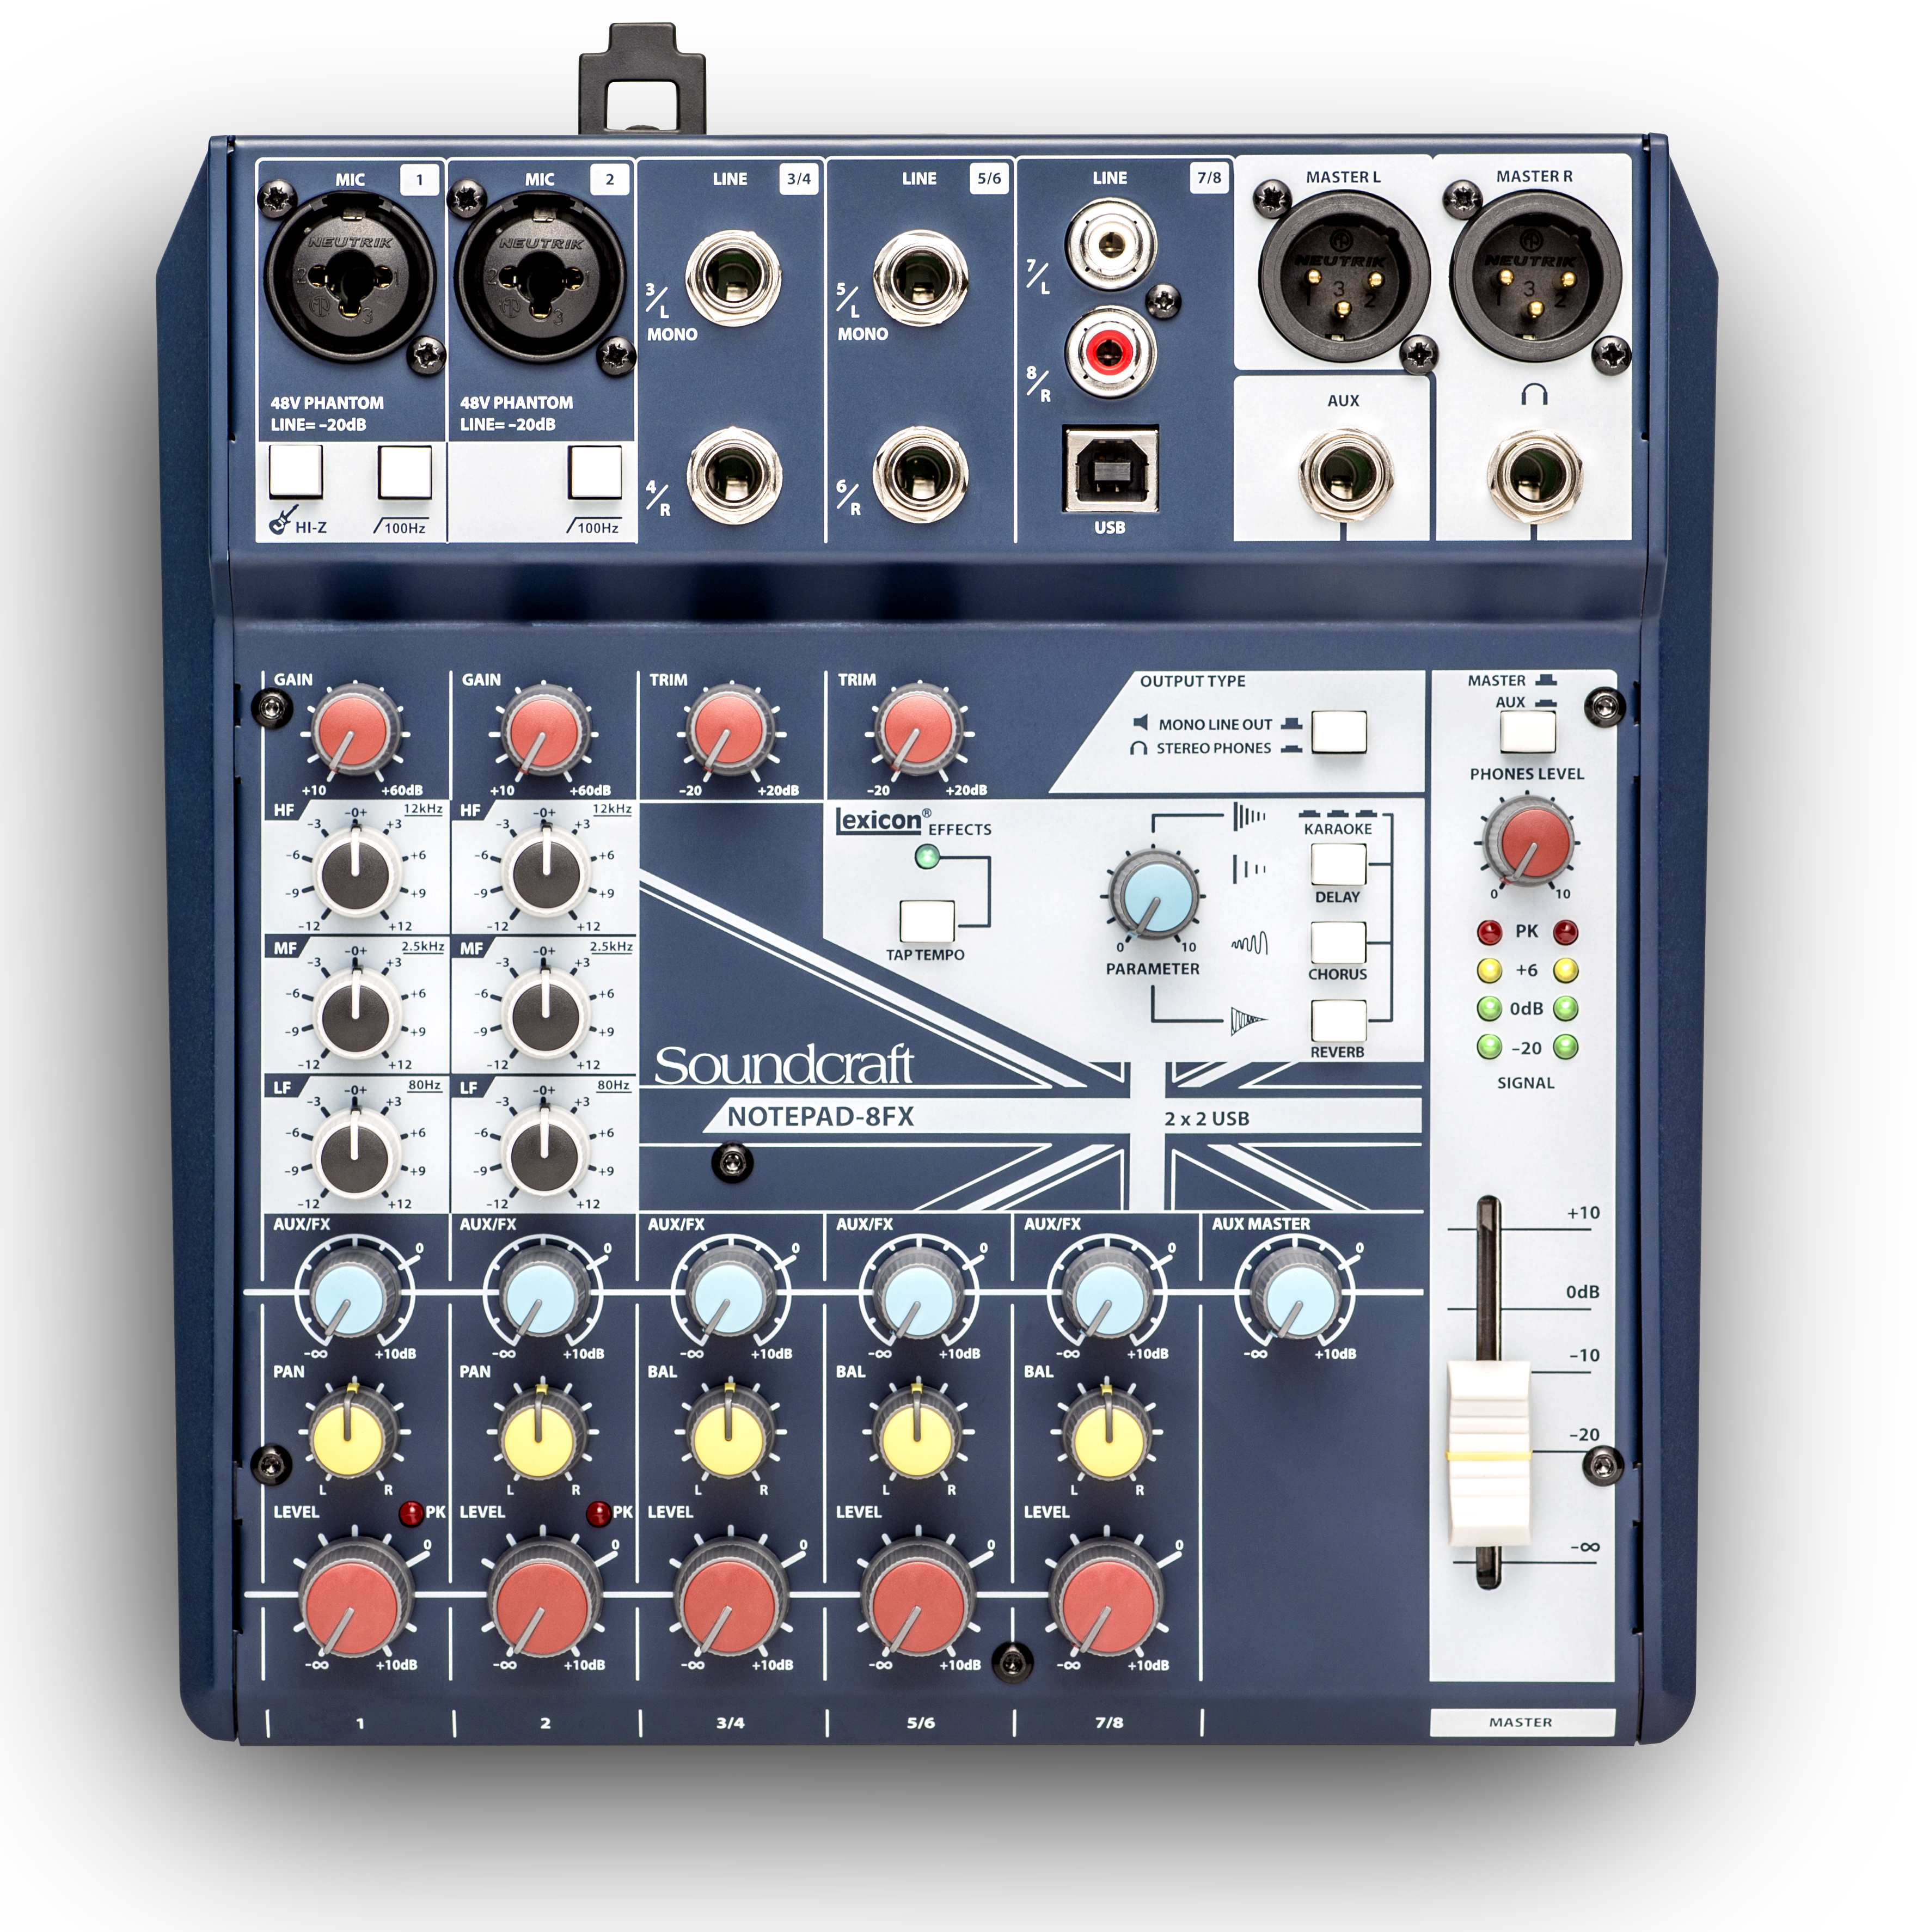 Soundcraft Notepad Mixer mixere - DrumCity.dk